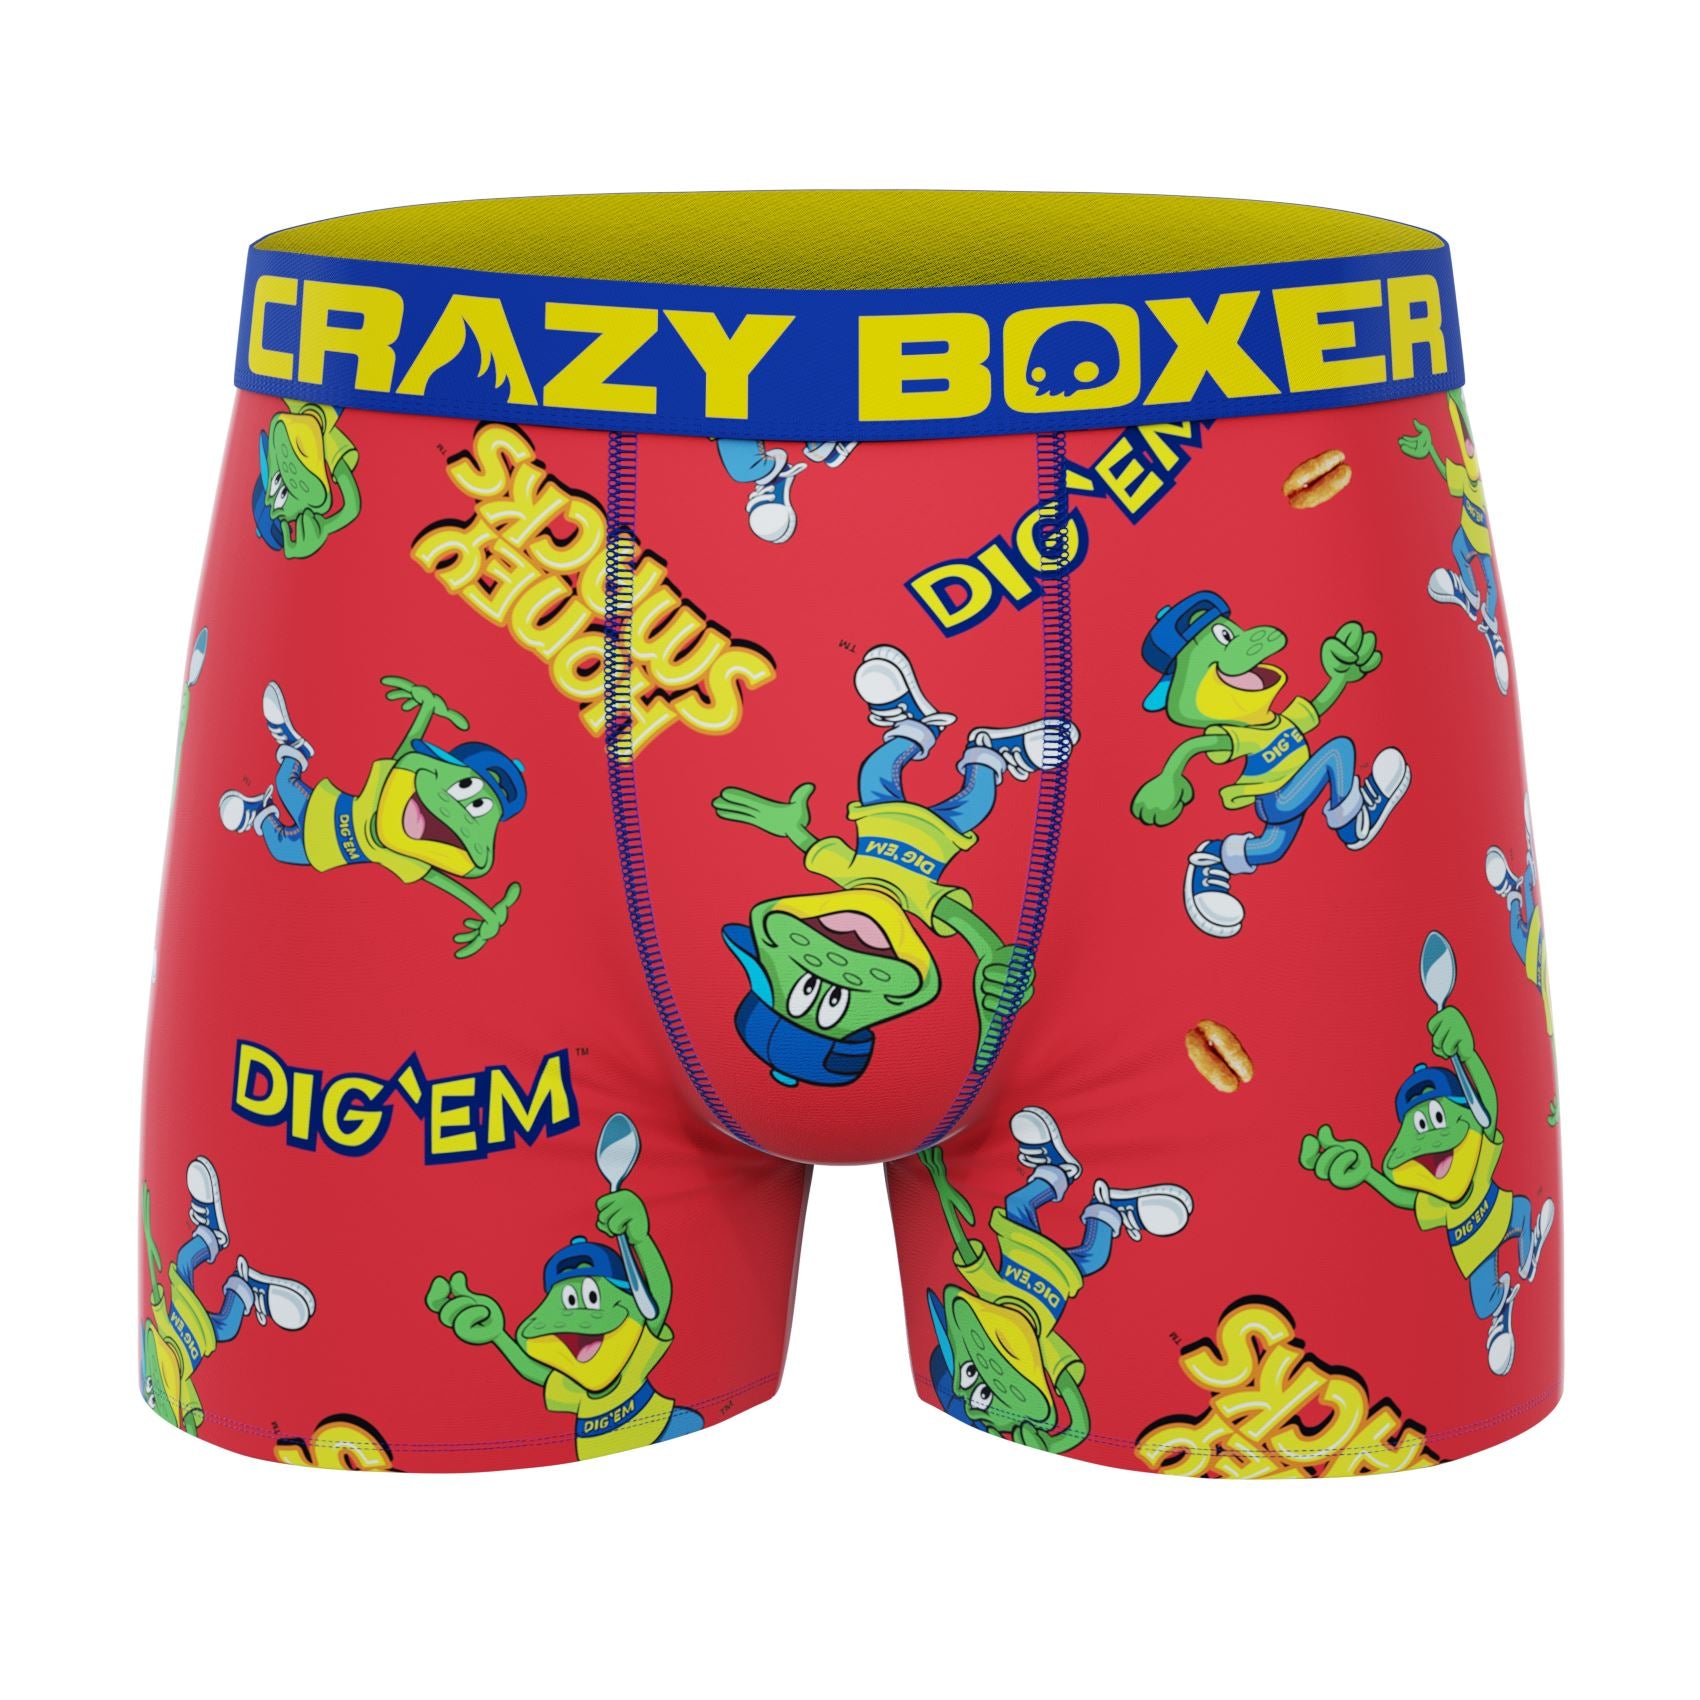 CRAZYBOXER Kellogg's Cereal Boxes Men's Boxer Briefs (3 pack)